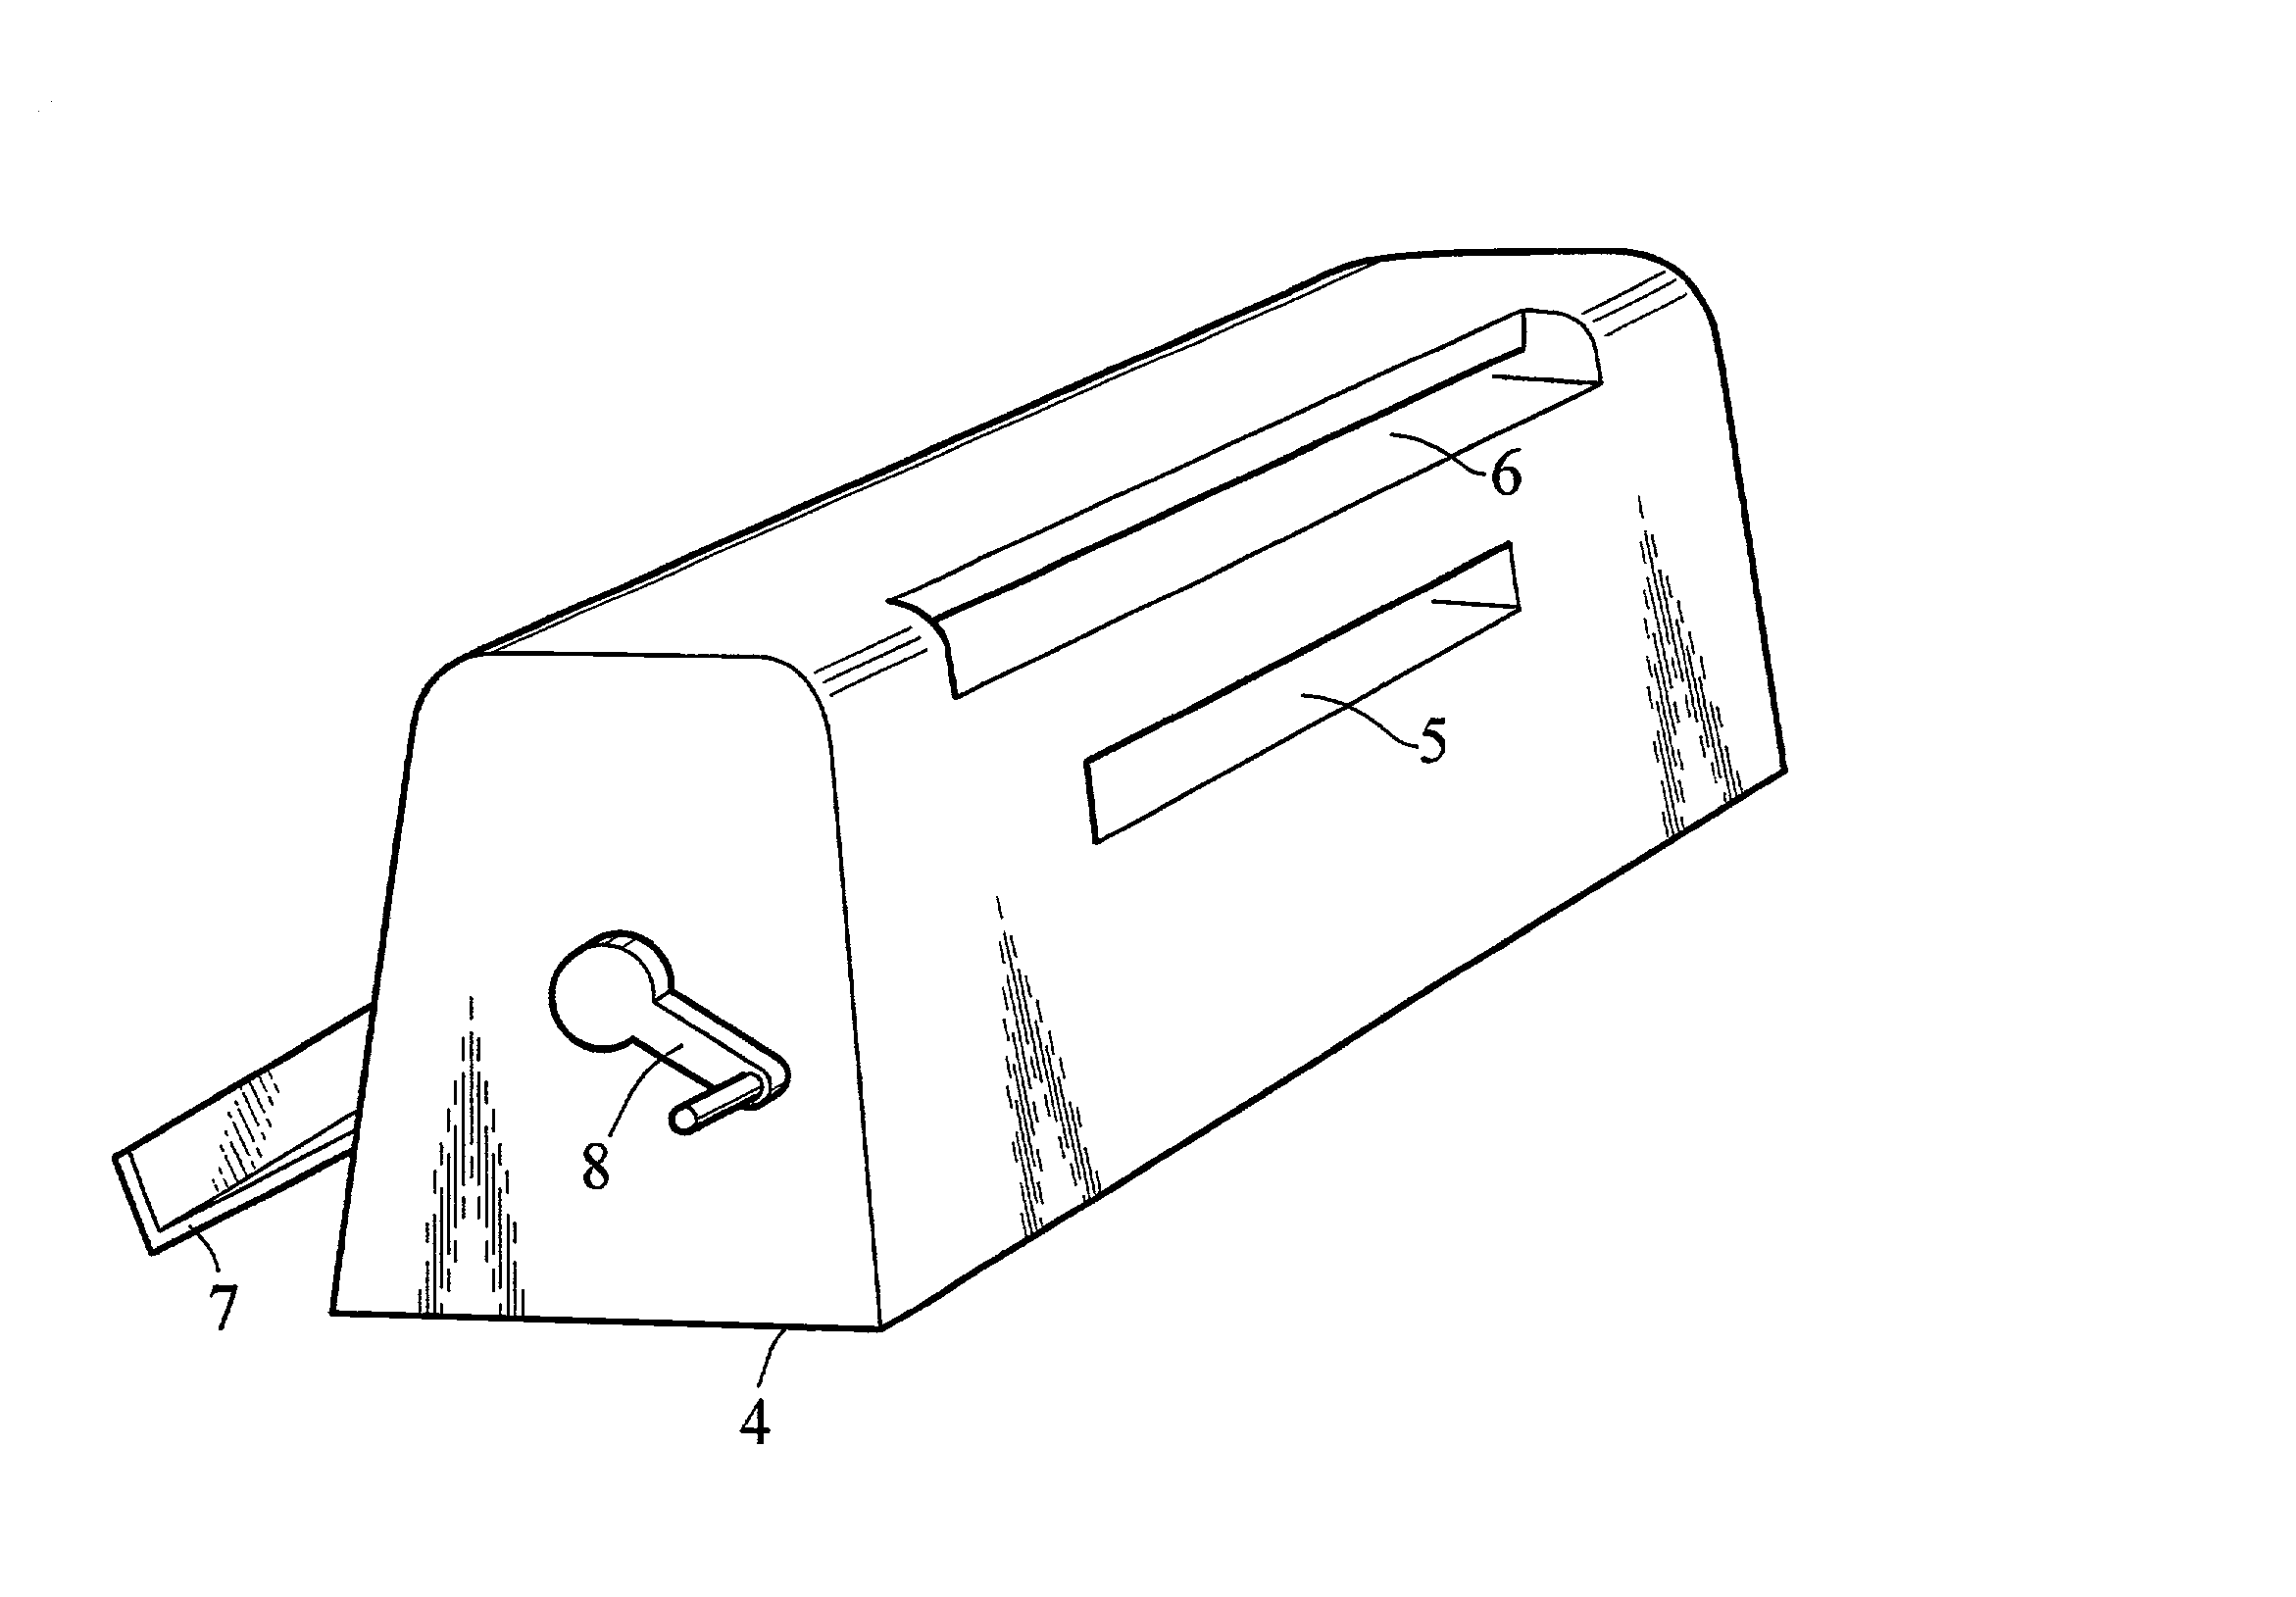 Paper cutting apparatus